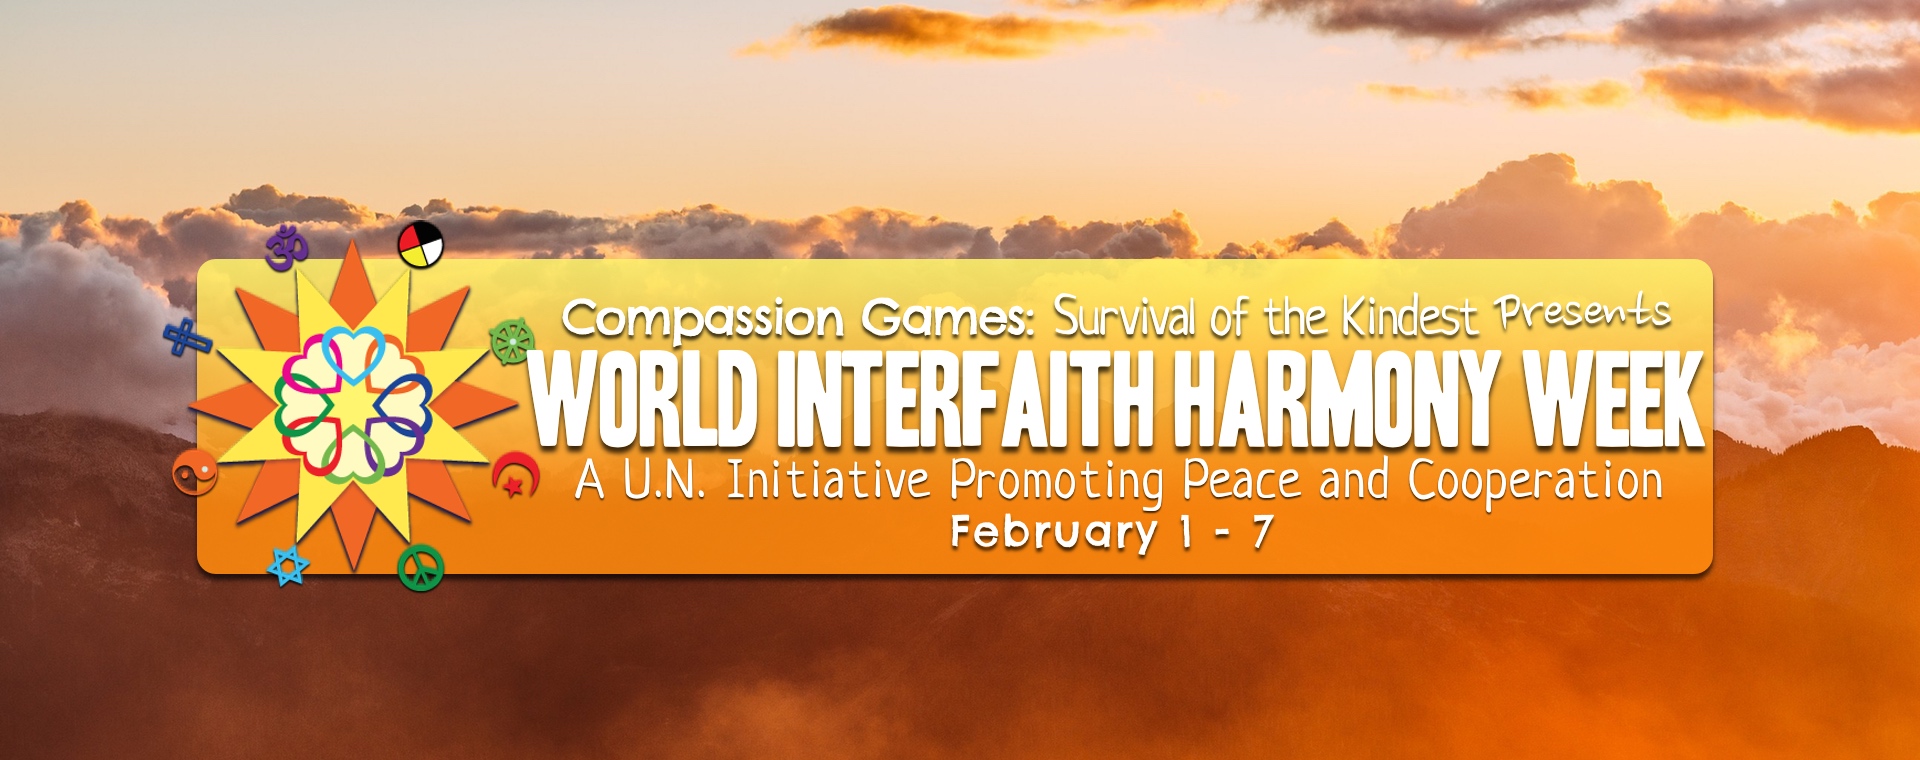 Compassion Games: World Interfaith Harmony Week - February 1-7